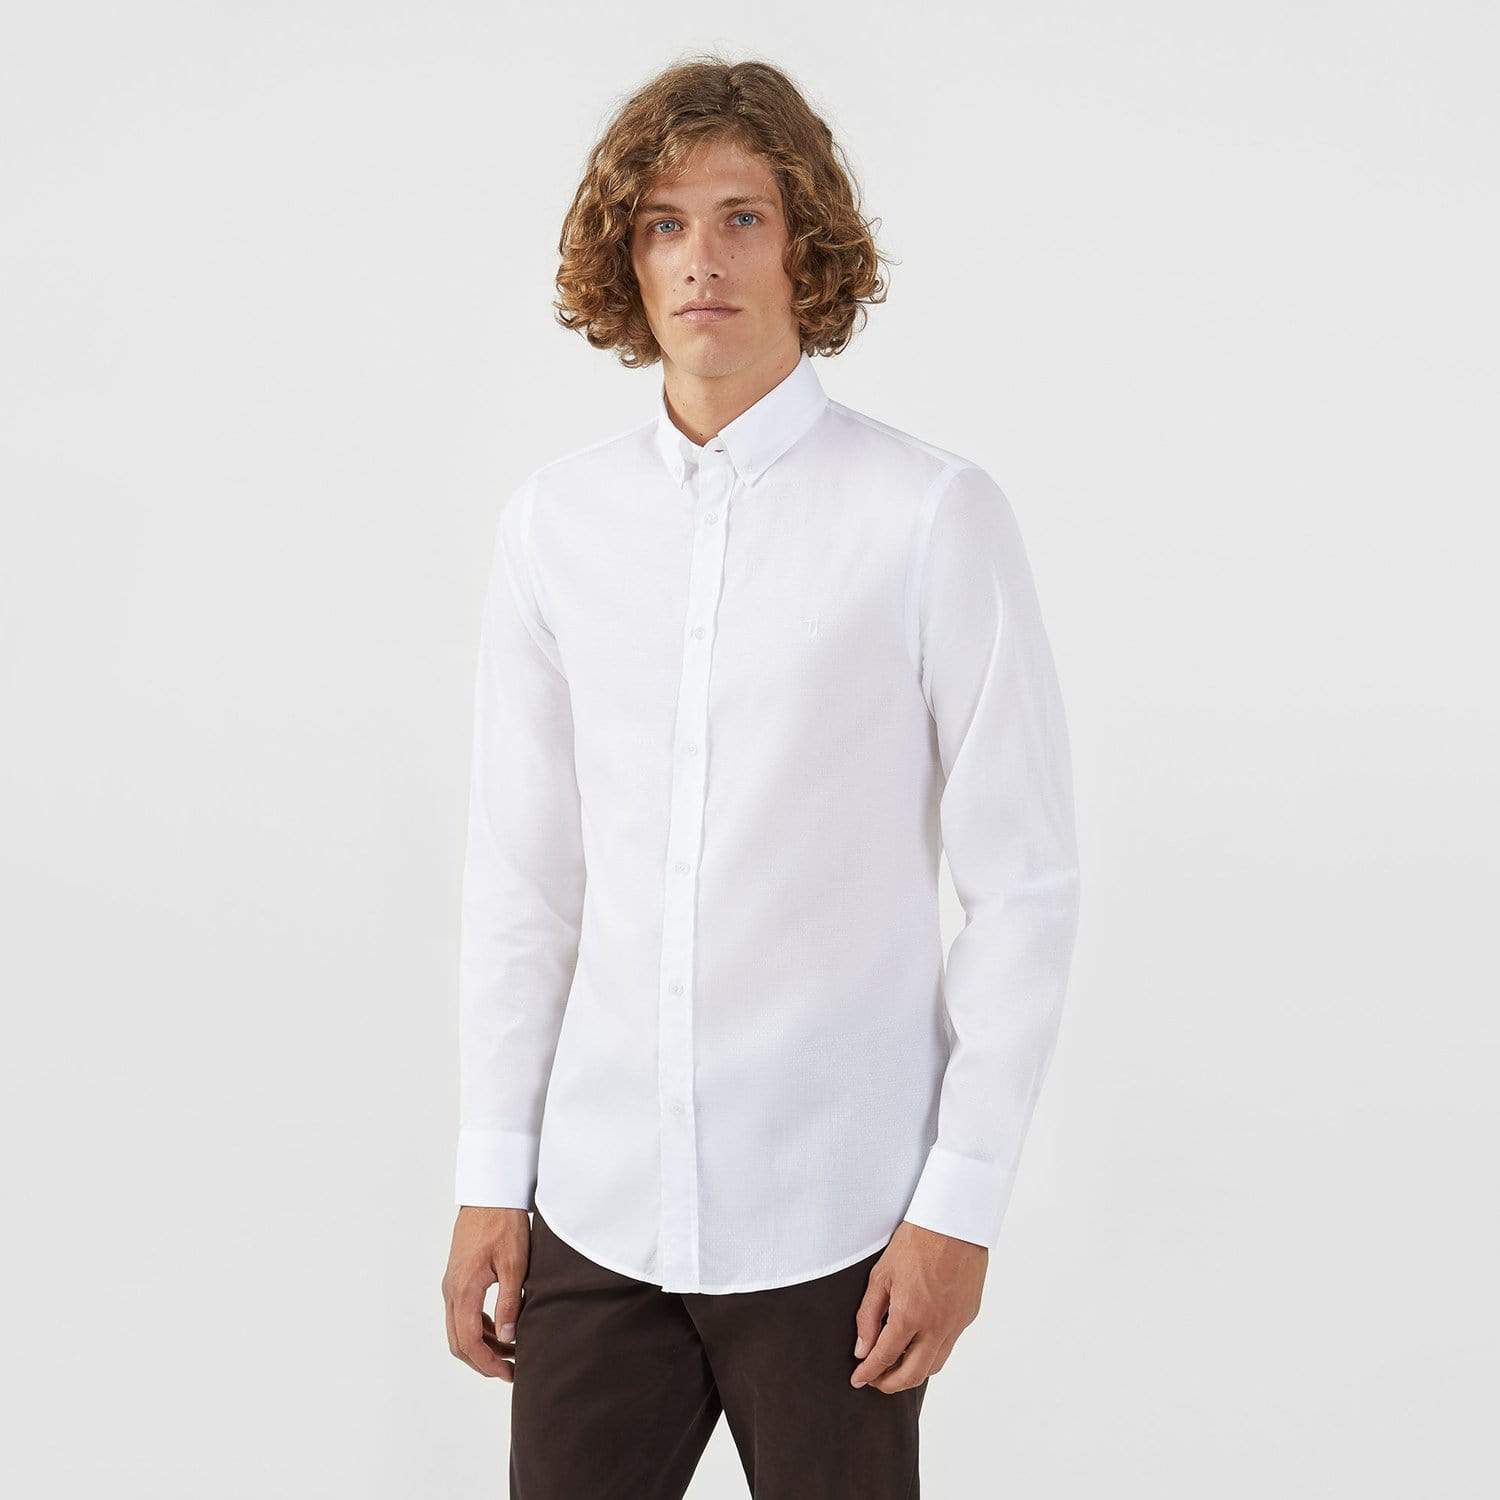 Trussardi Button Down Cotton Regular Fit Shirt - White - 52C00069-W001 - Jashanmal Home